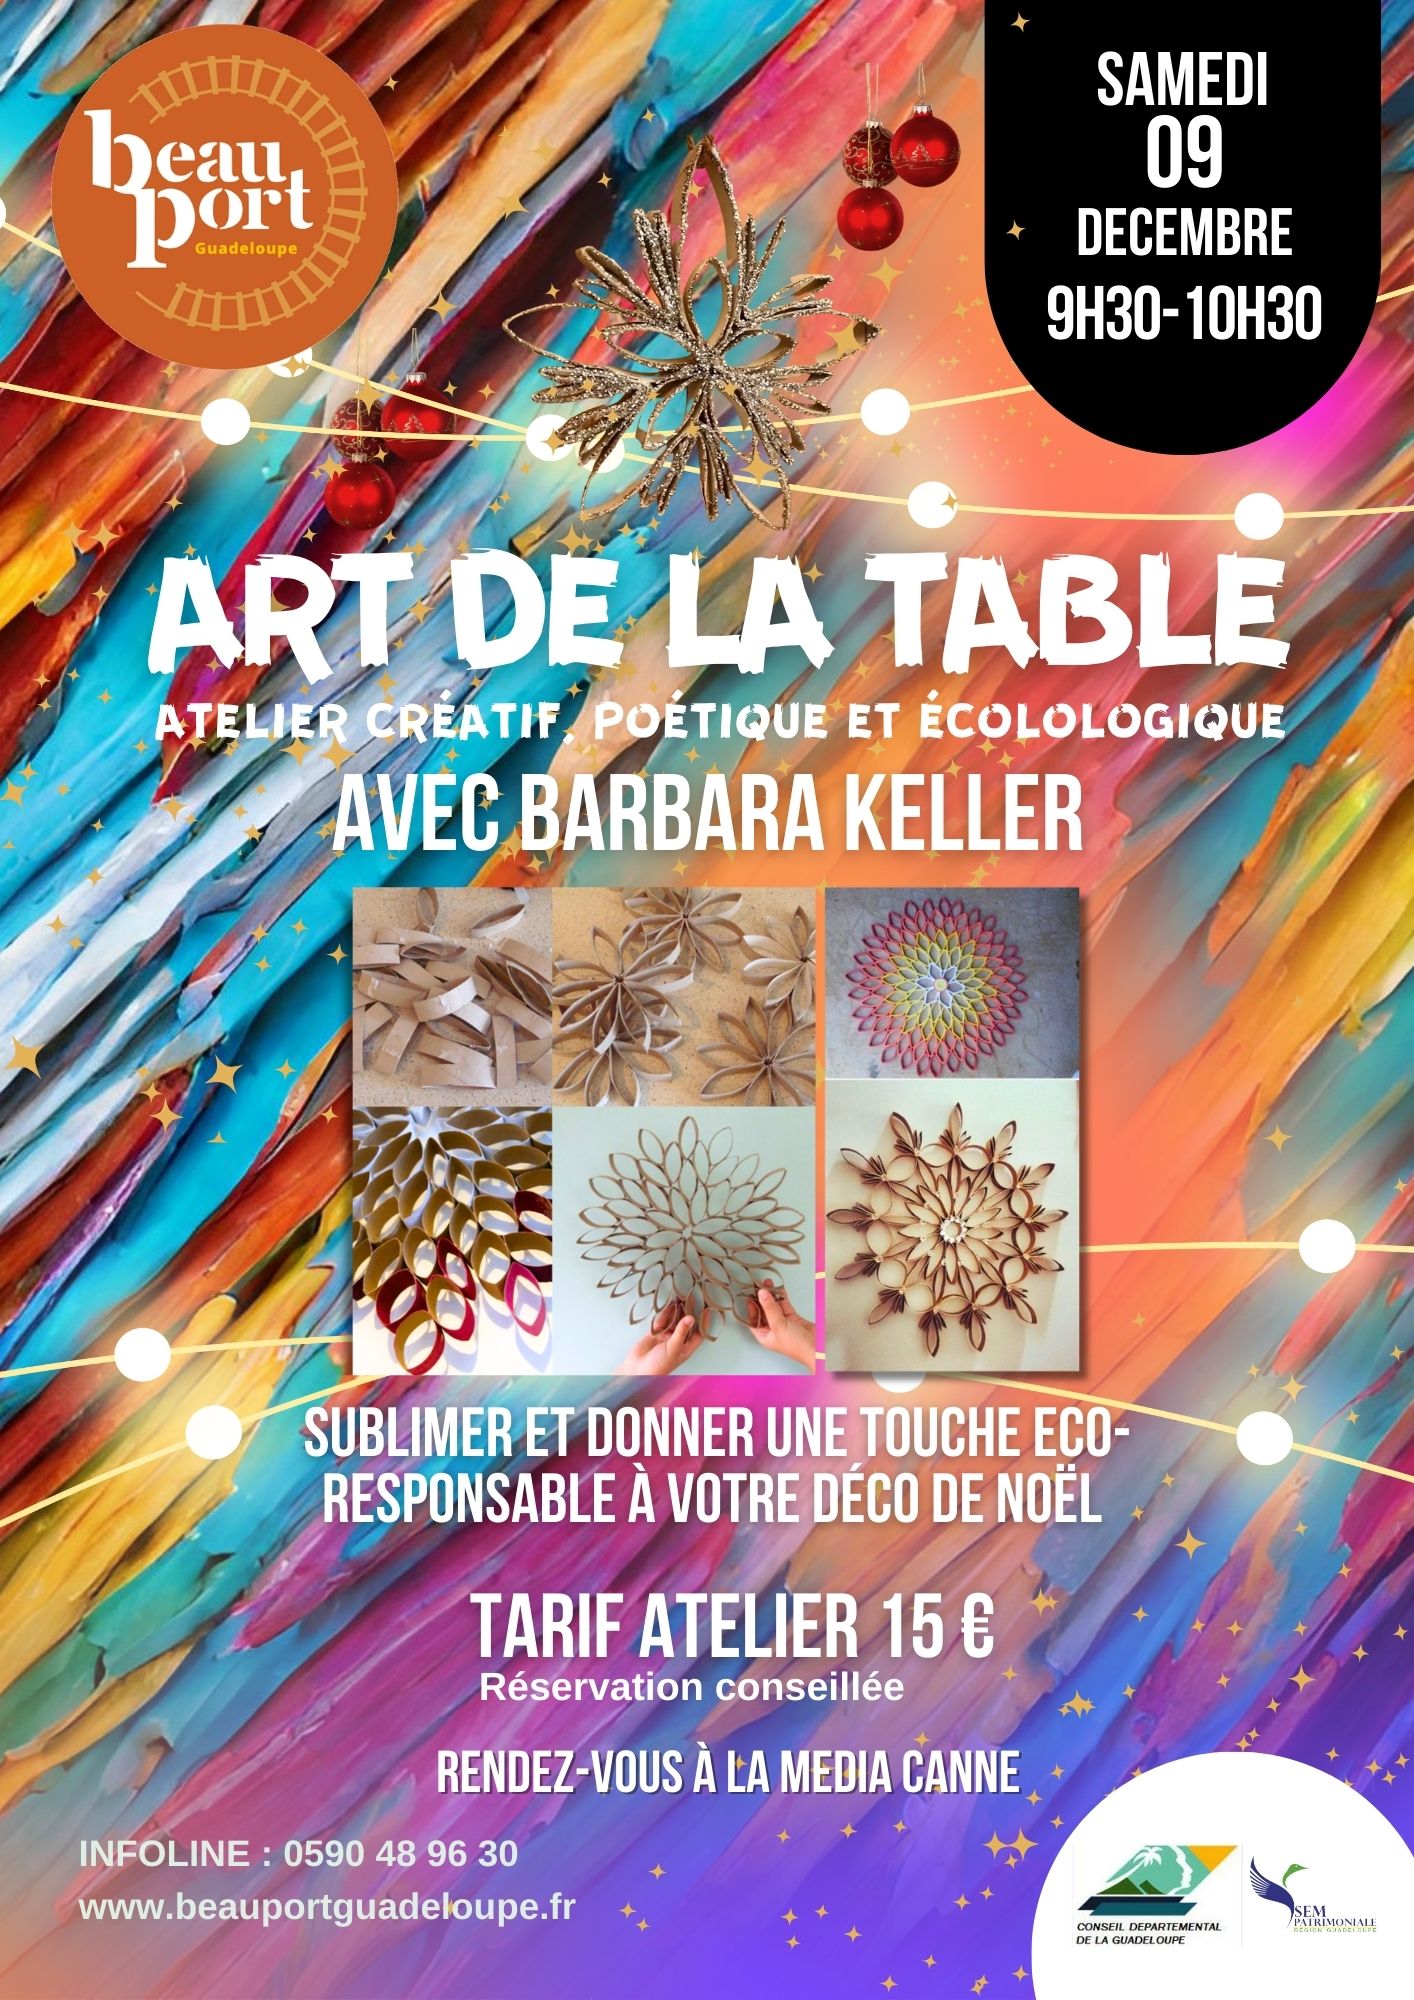 Atelier "ART DE LA TABLE "